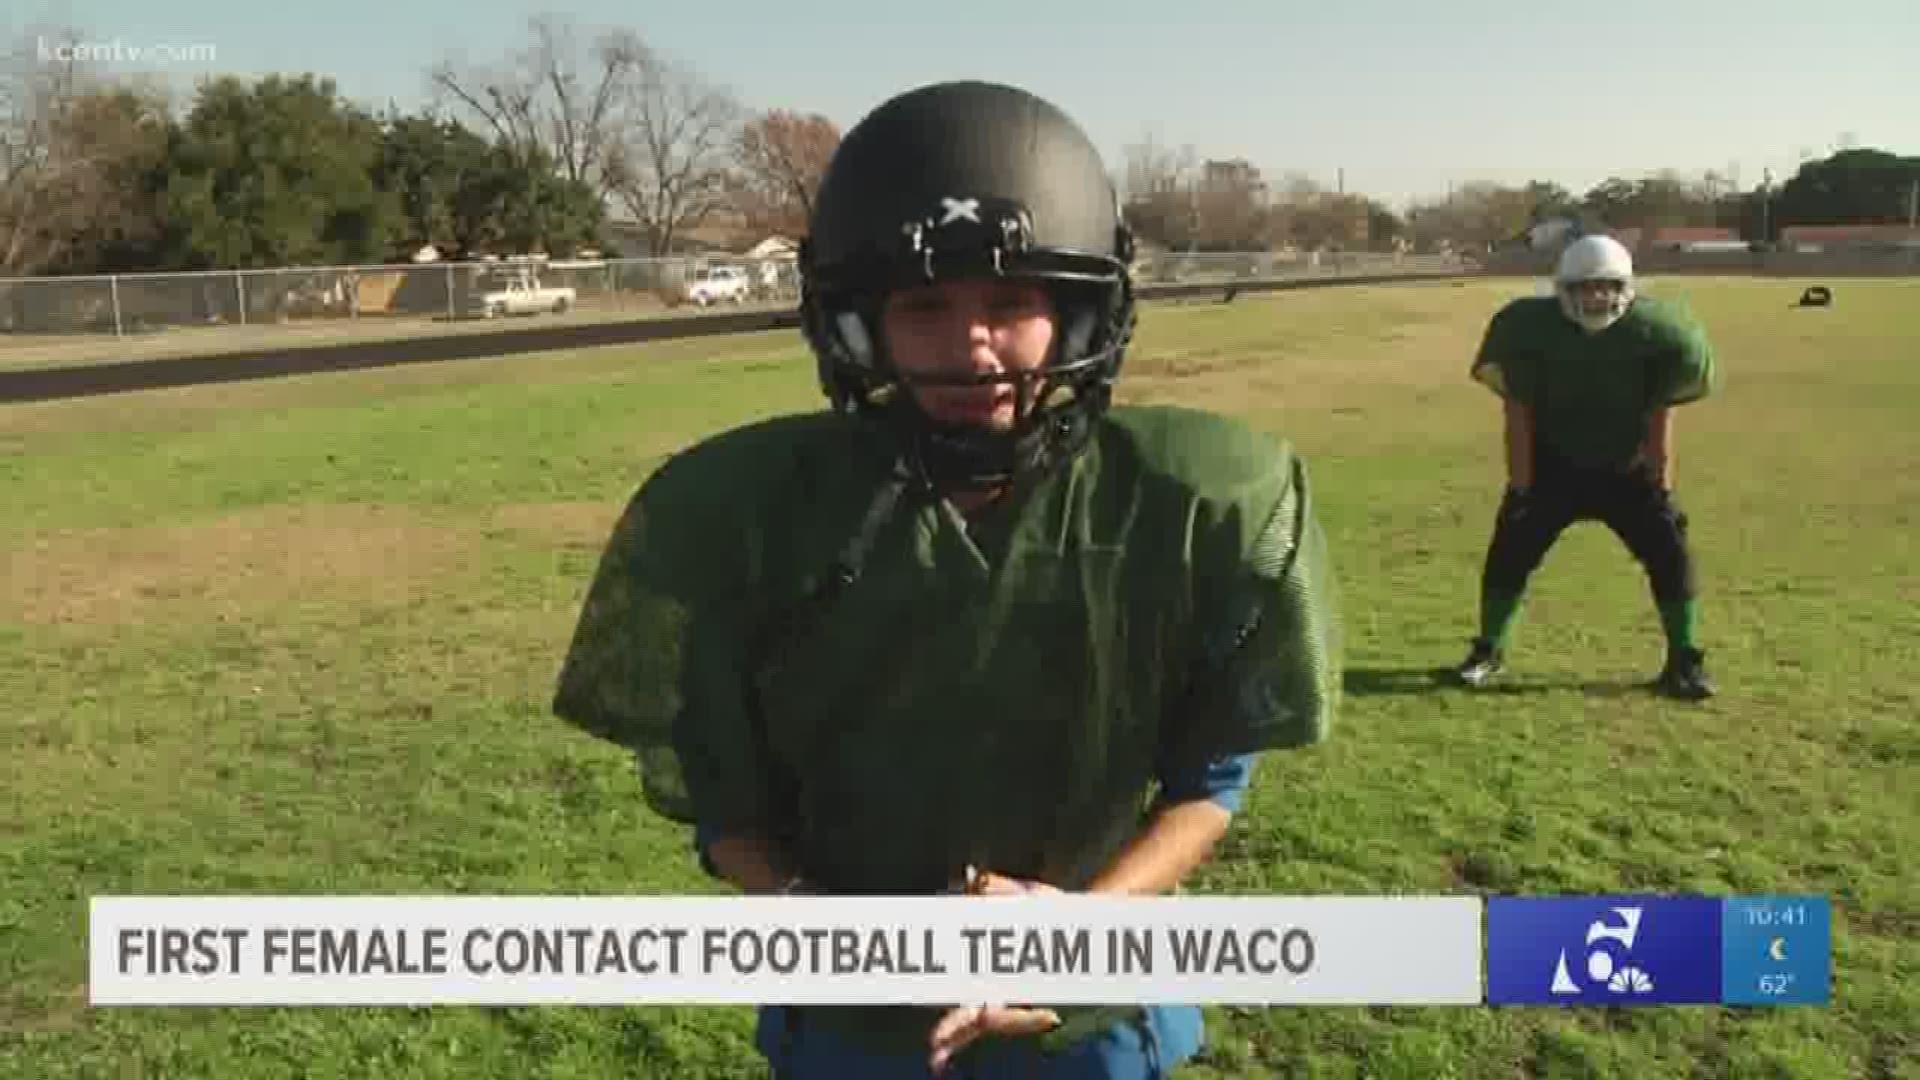 Waco now has an all-female full contact football team